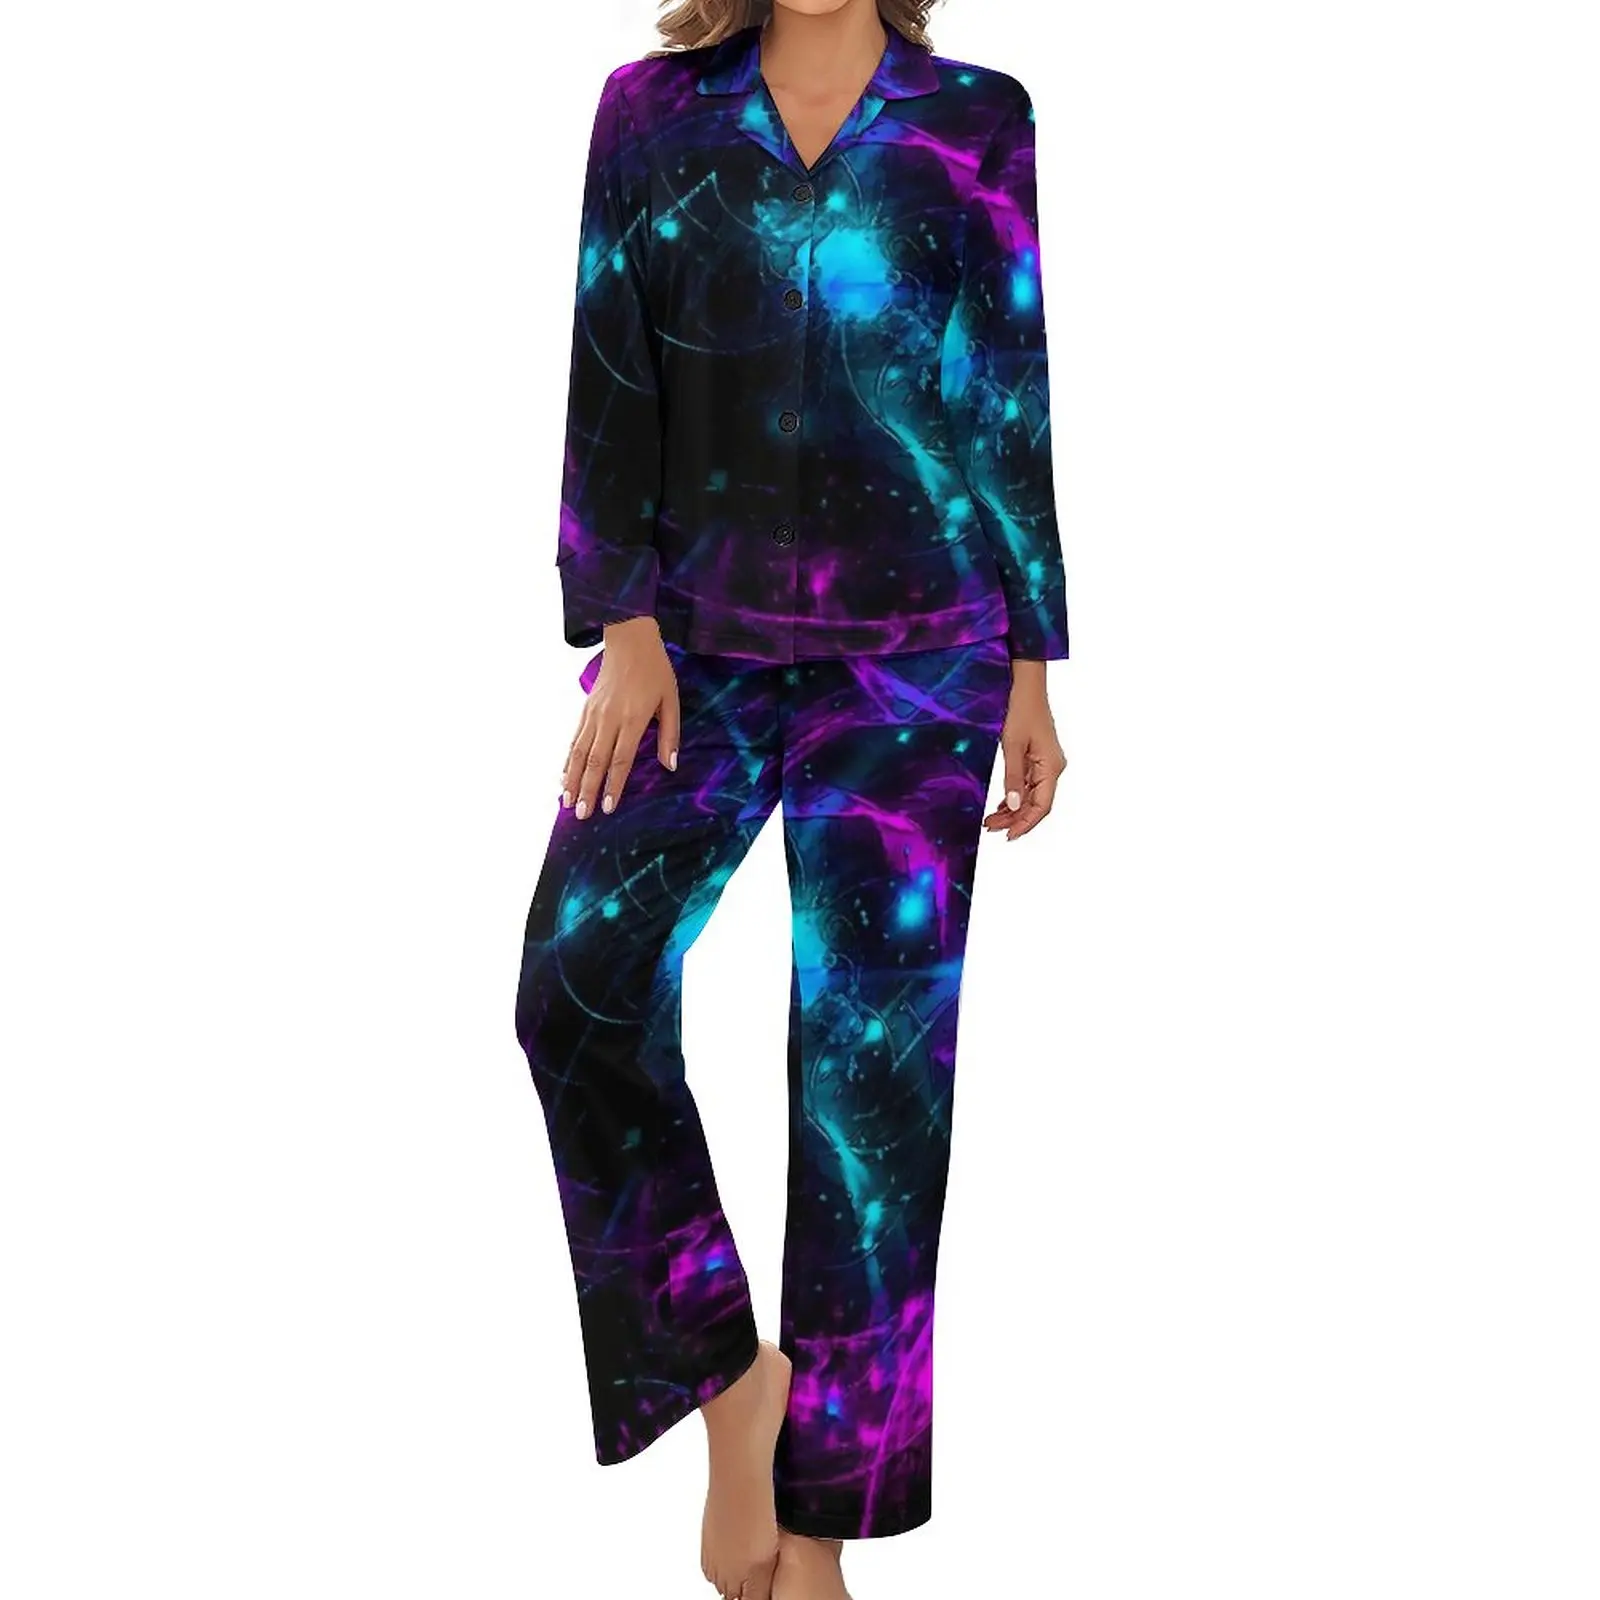 

Neon Galaxy Pajamas Long-Sleeve Purple And Blue 2 Pieces Home Pajama Sets Autumn Female V Neck Romantic Nightwear